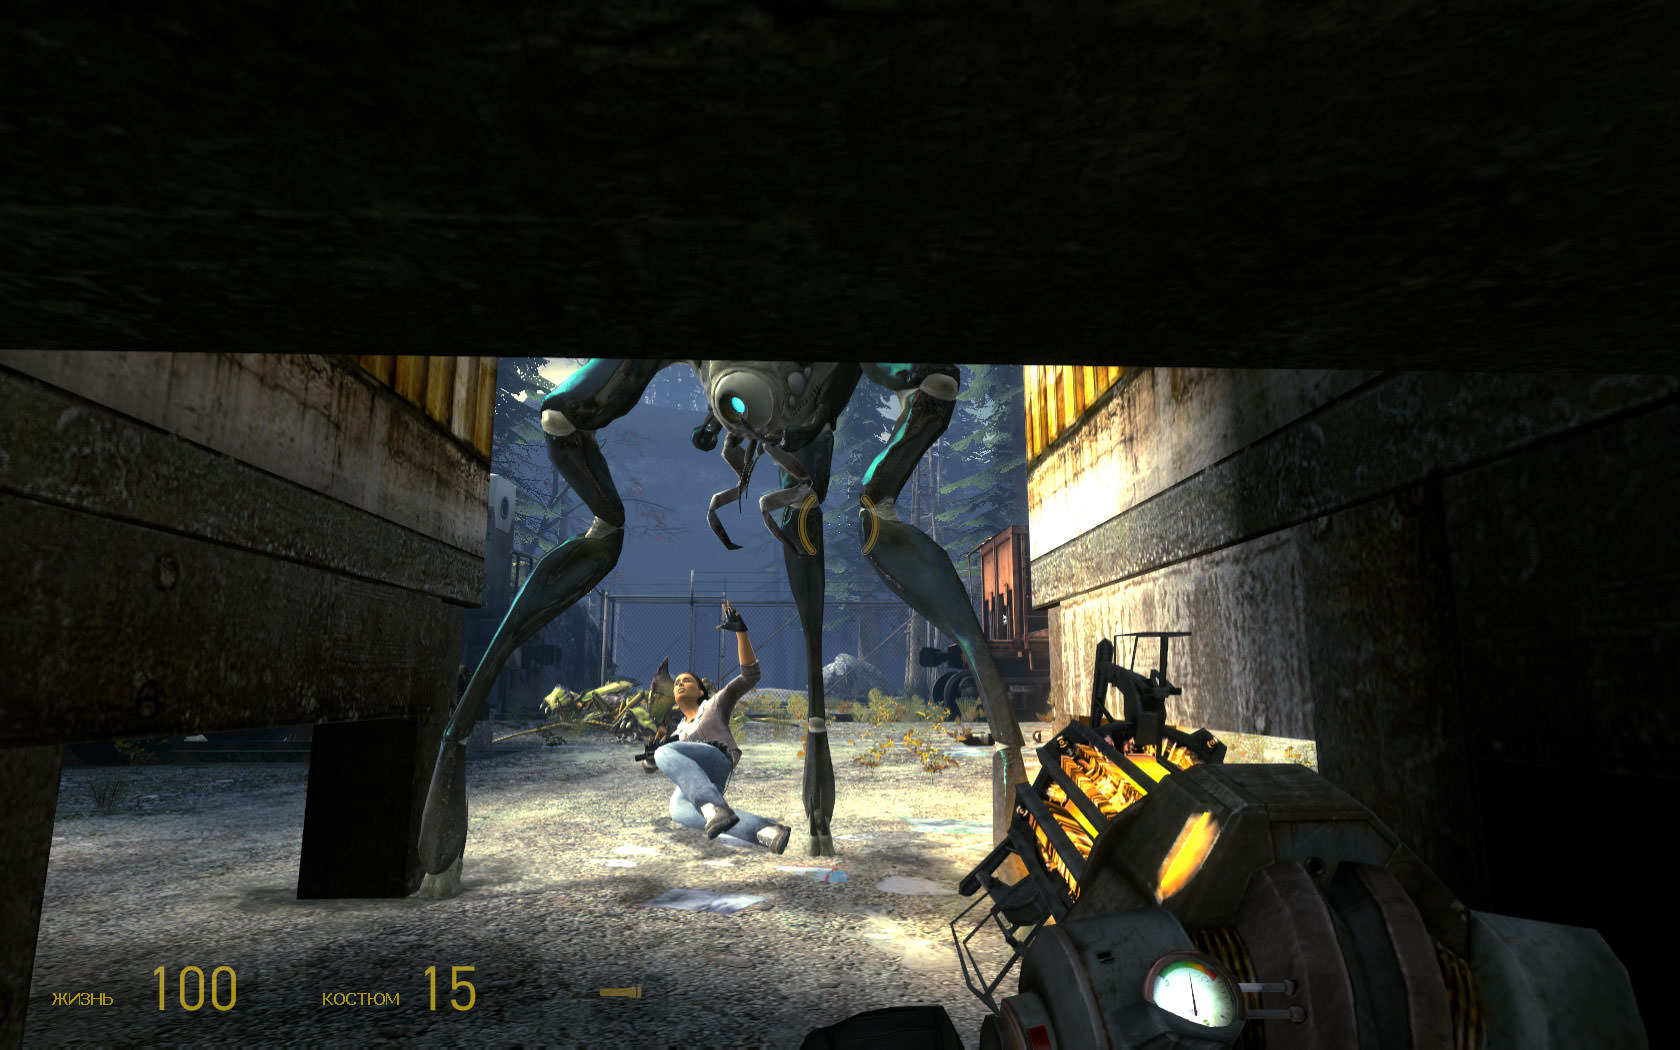 Игры на движке соурс. Half-Life 2: Episode three. Шутер за повстанцев на source движке. Лучшие игры на движке соурс.